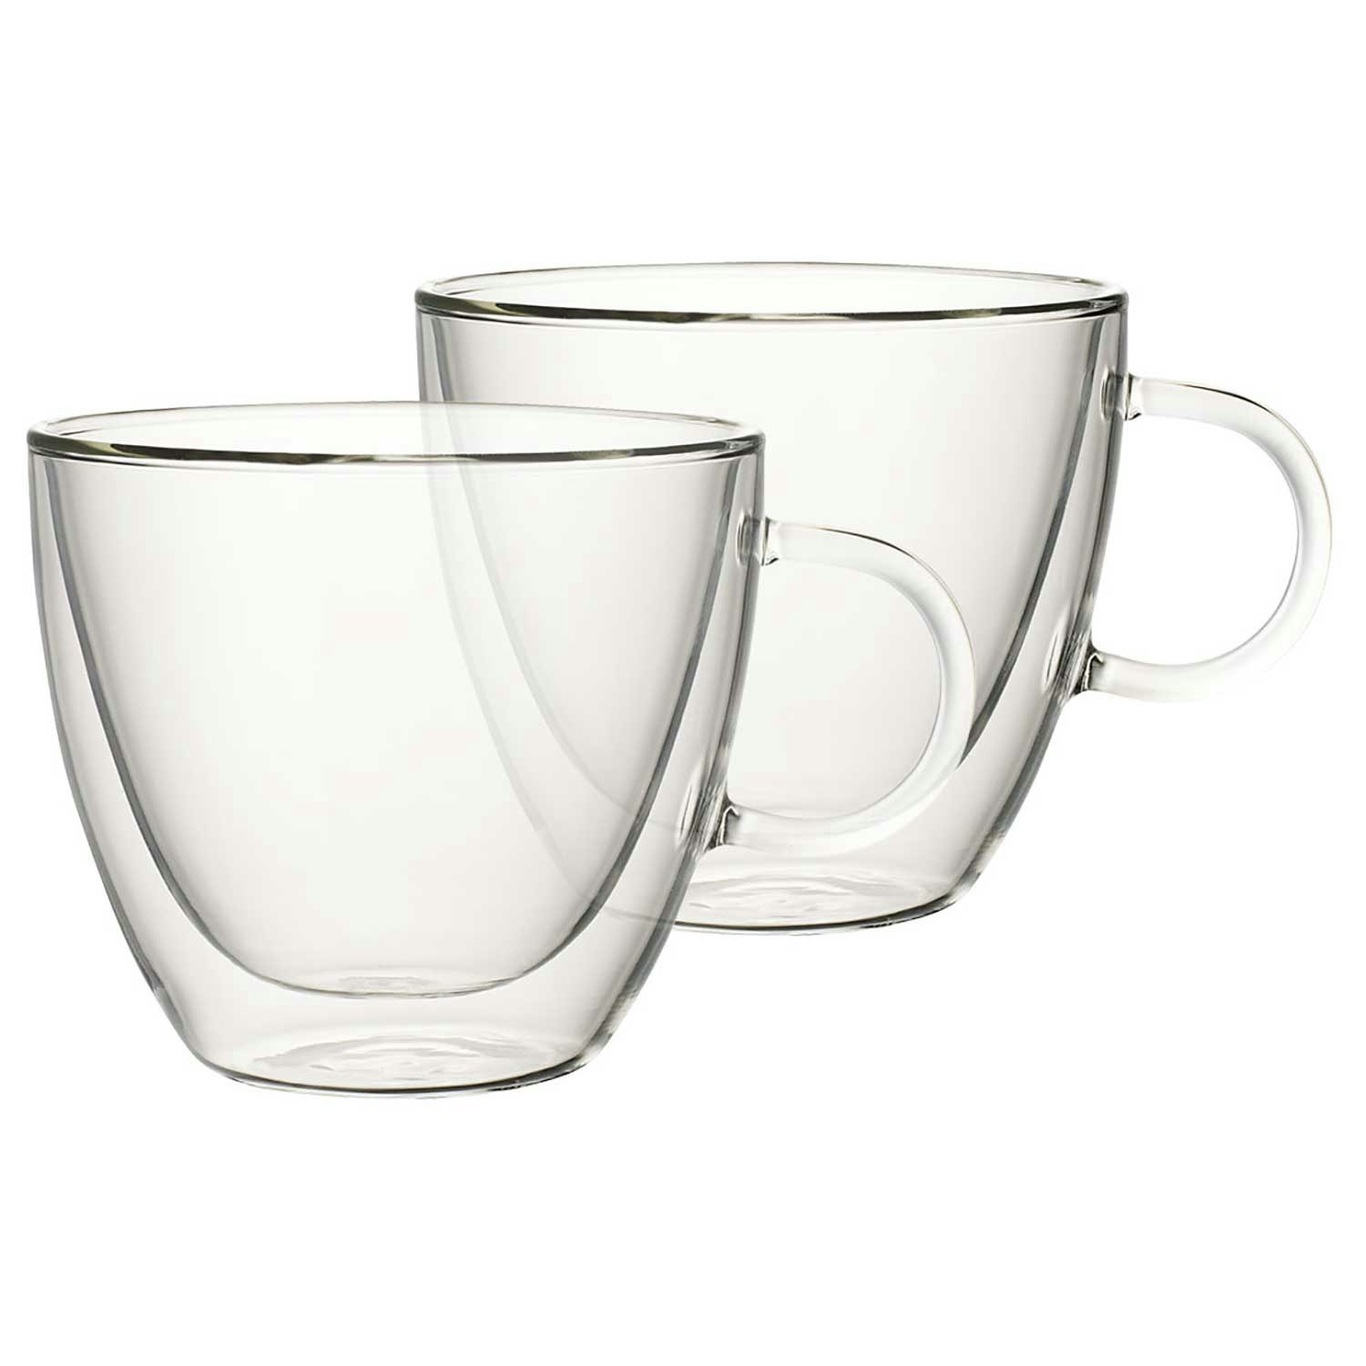 https://royaldesign.com/image/2/villeroy-boch-artesano-hot-cold-beverage-cup-2-pcs-21?w=800&quality=80